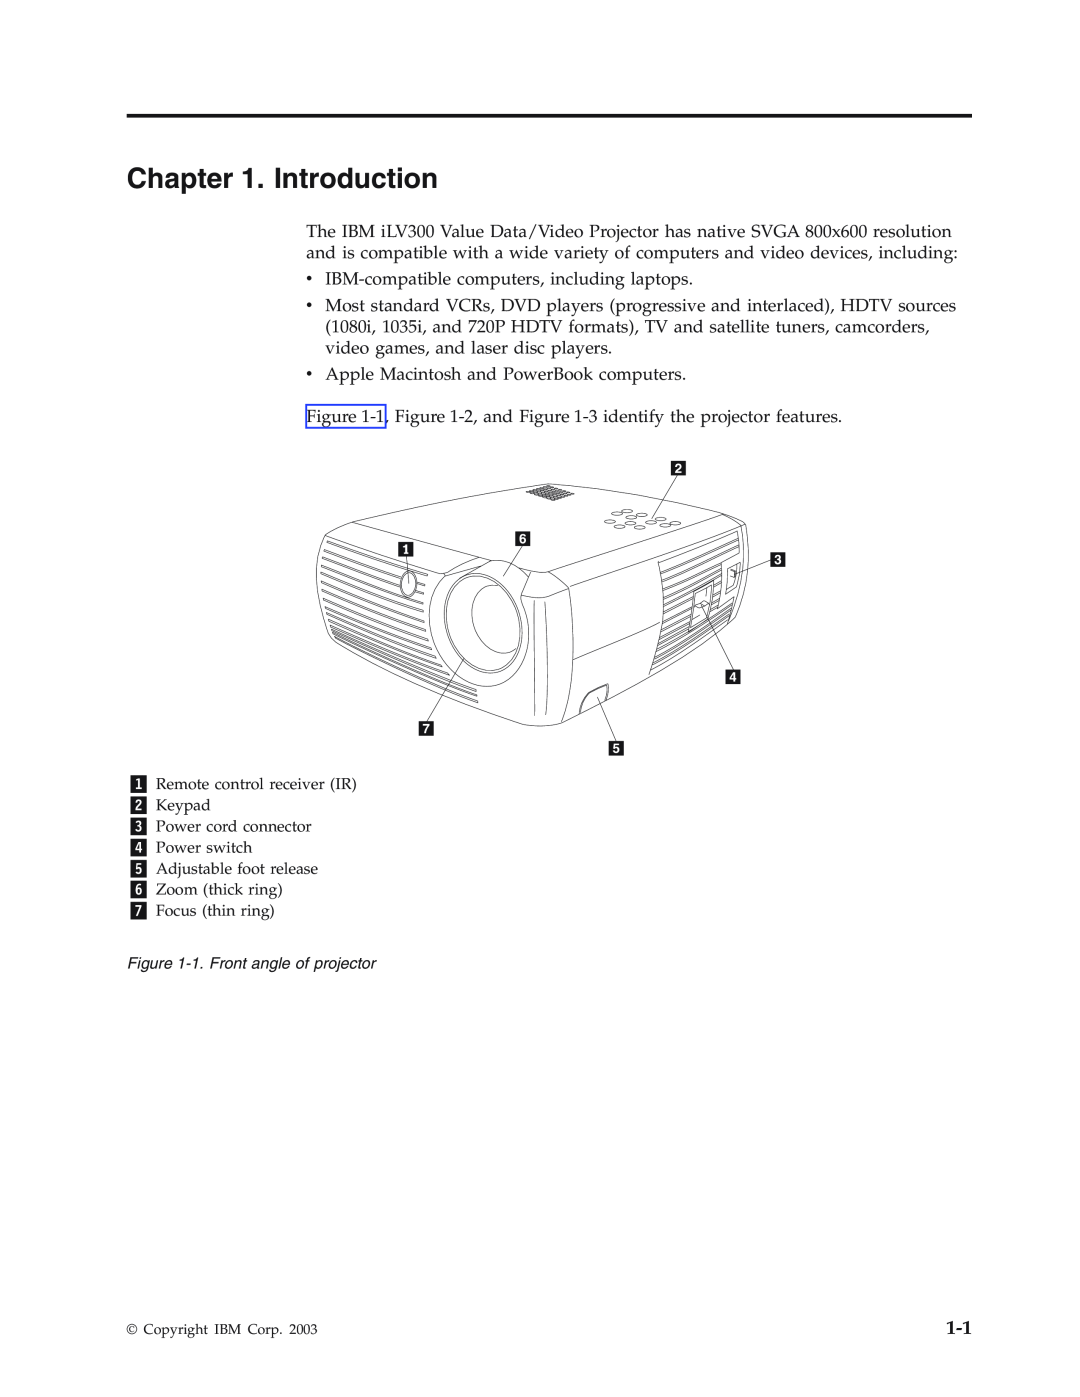 IBM Partner Pavilion iLV300 manual Introduction 